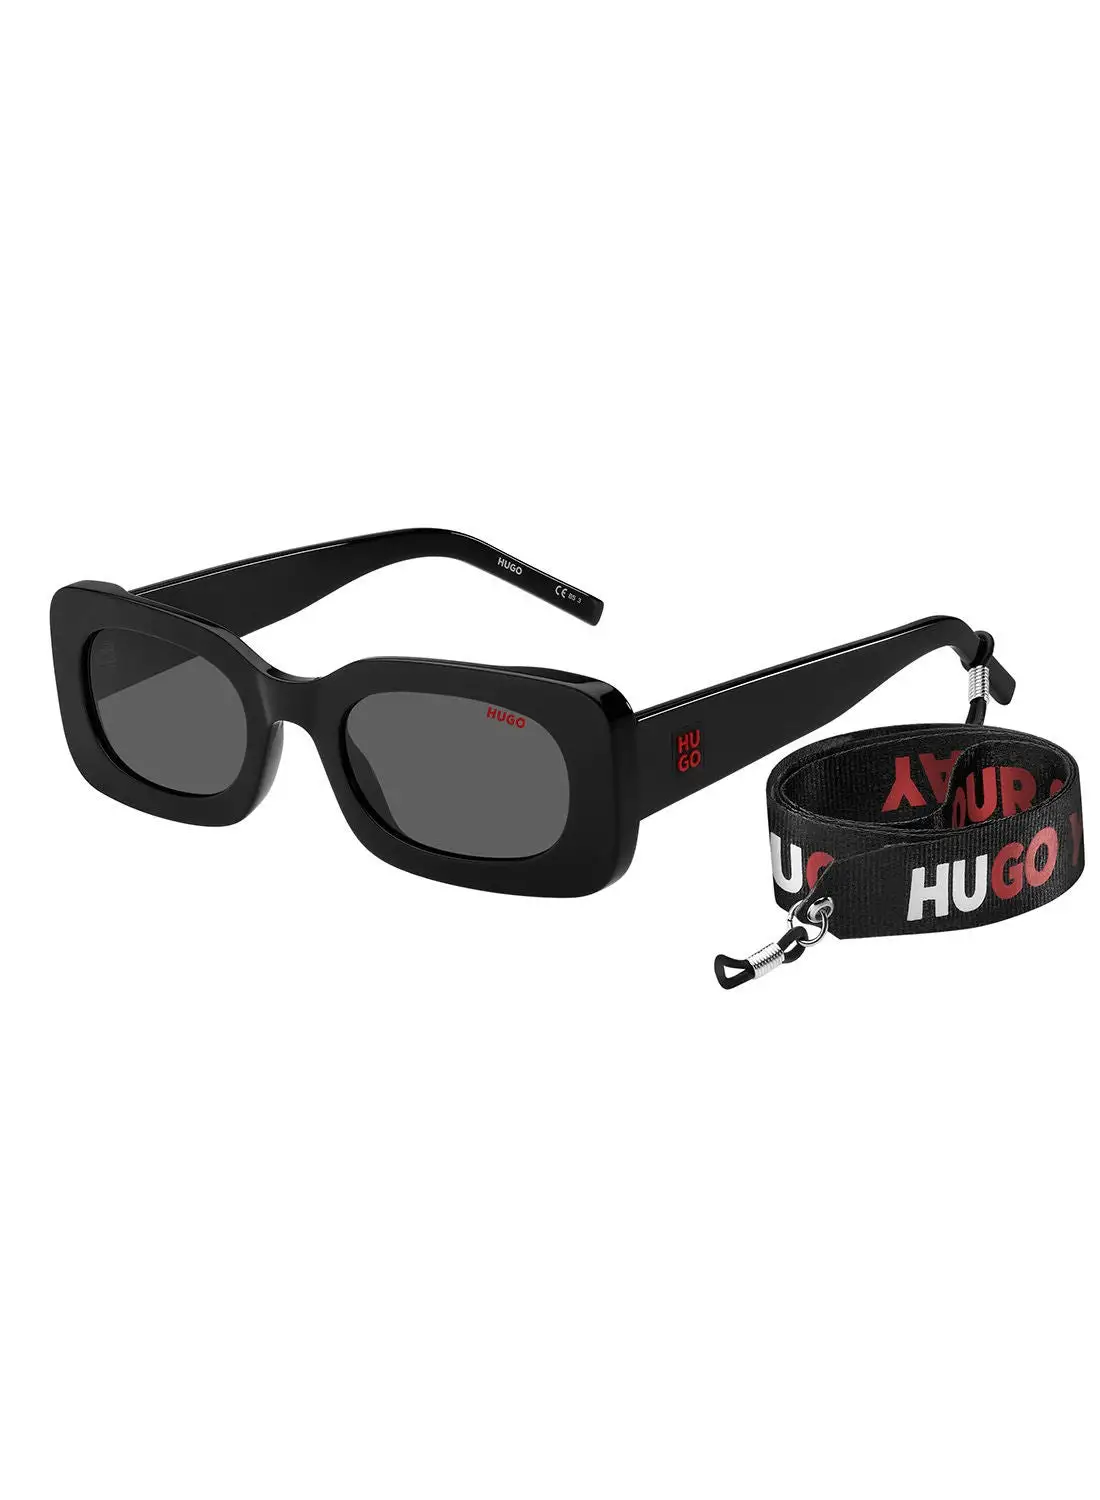 HUGO نظارة شمسية بيضاوية للحماية من الأشعة فوق البنفسجية للنساء - Hg 1220/S Black 52 - مقاس العدسة: 52 ملم